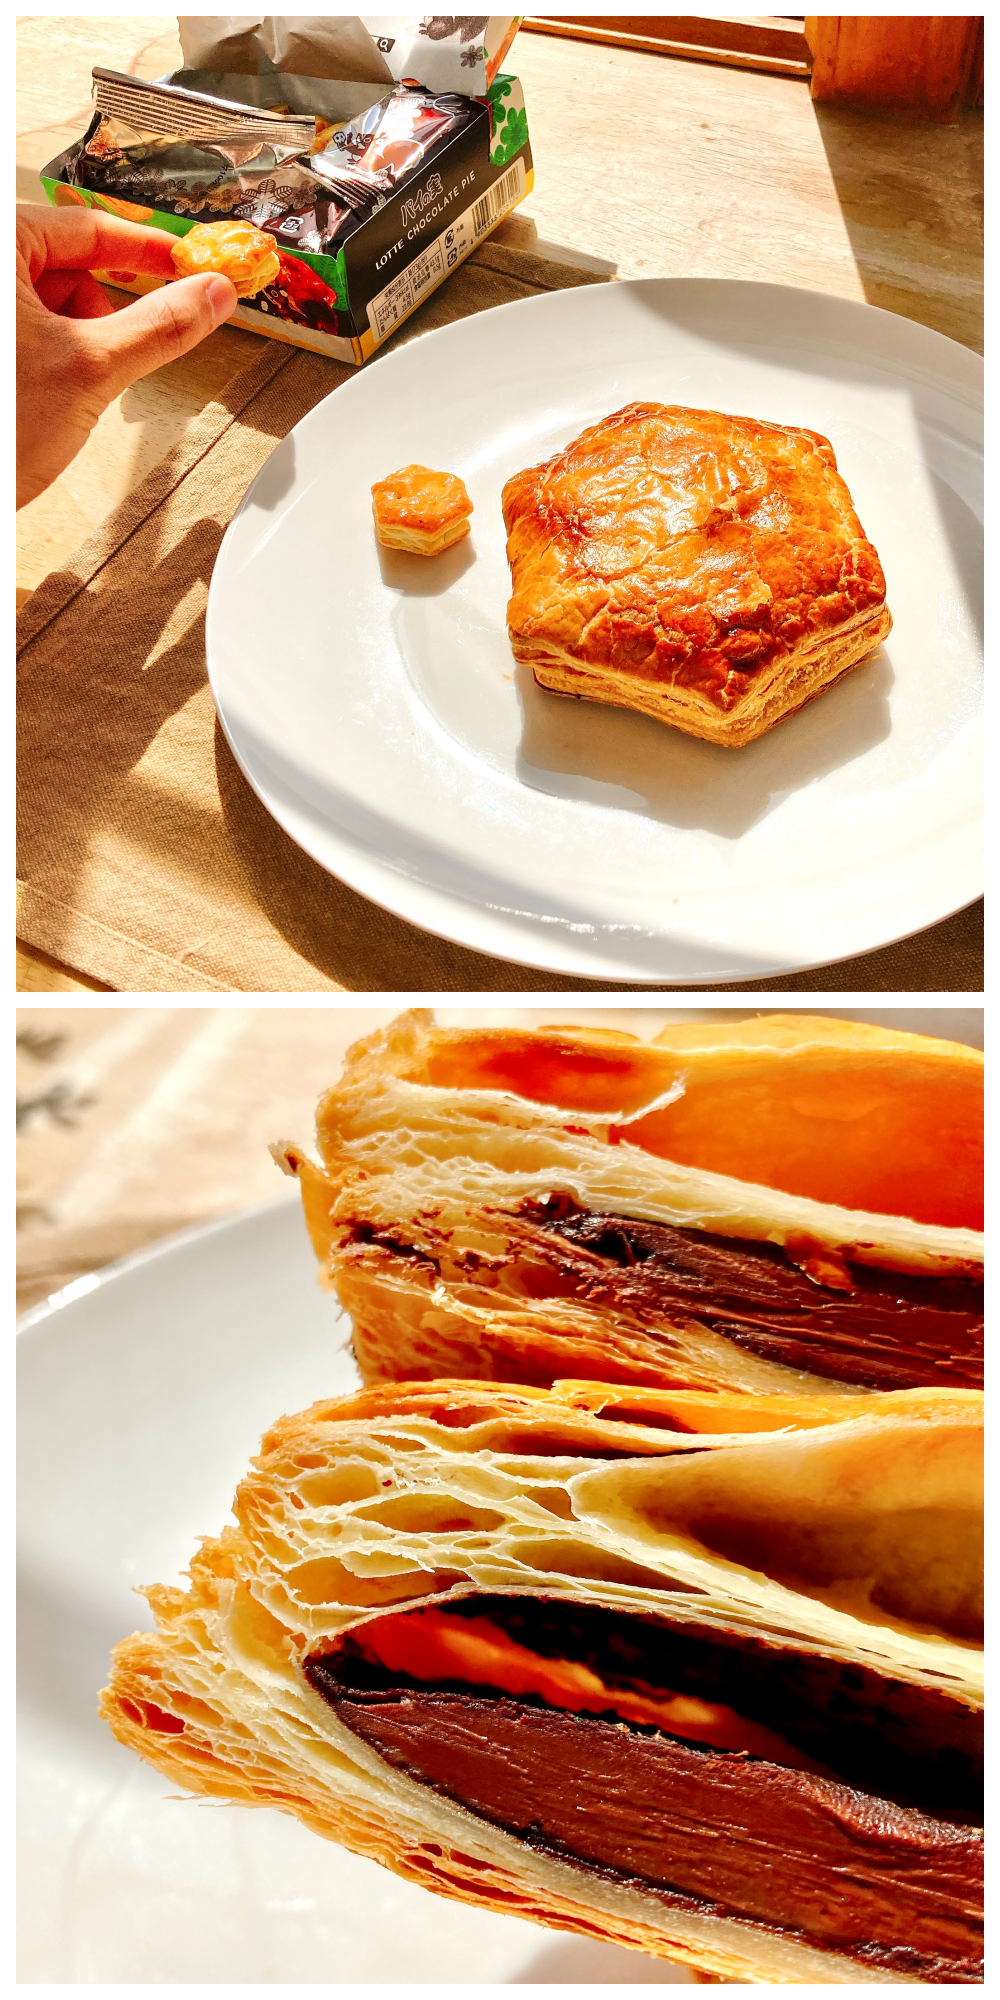 FamilyMart（ファミリーマート）の国民的おやつを20倍にしたパン「パイの実みたいなデニッシュ」